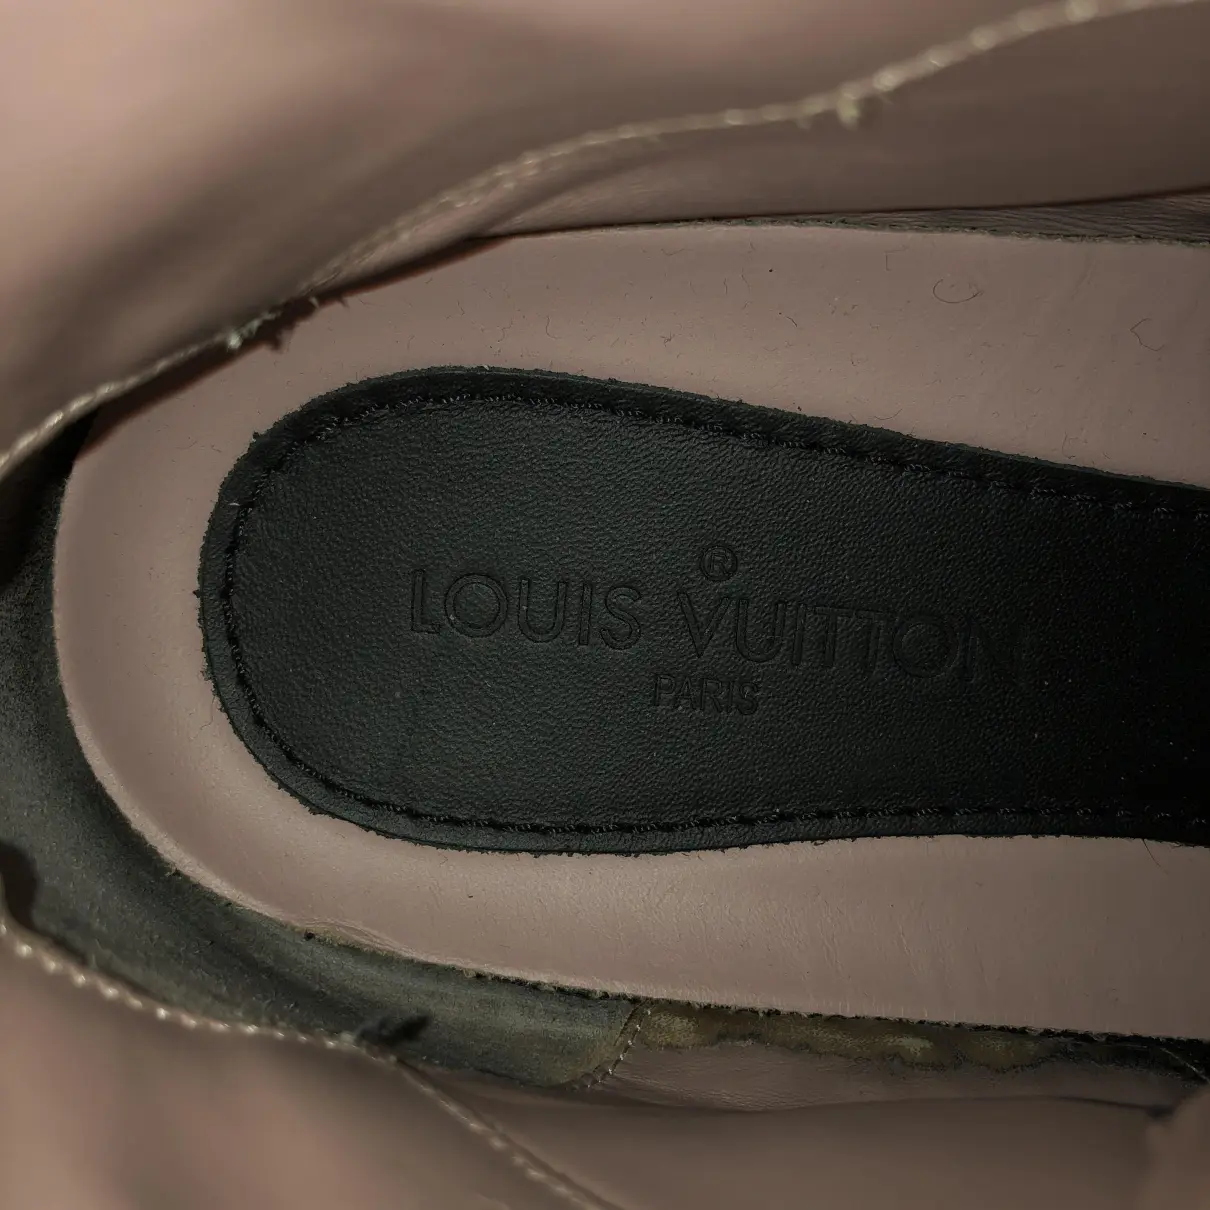 Luxury Louis Vuitton Trainers Men